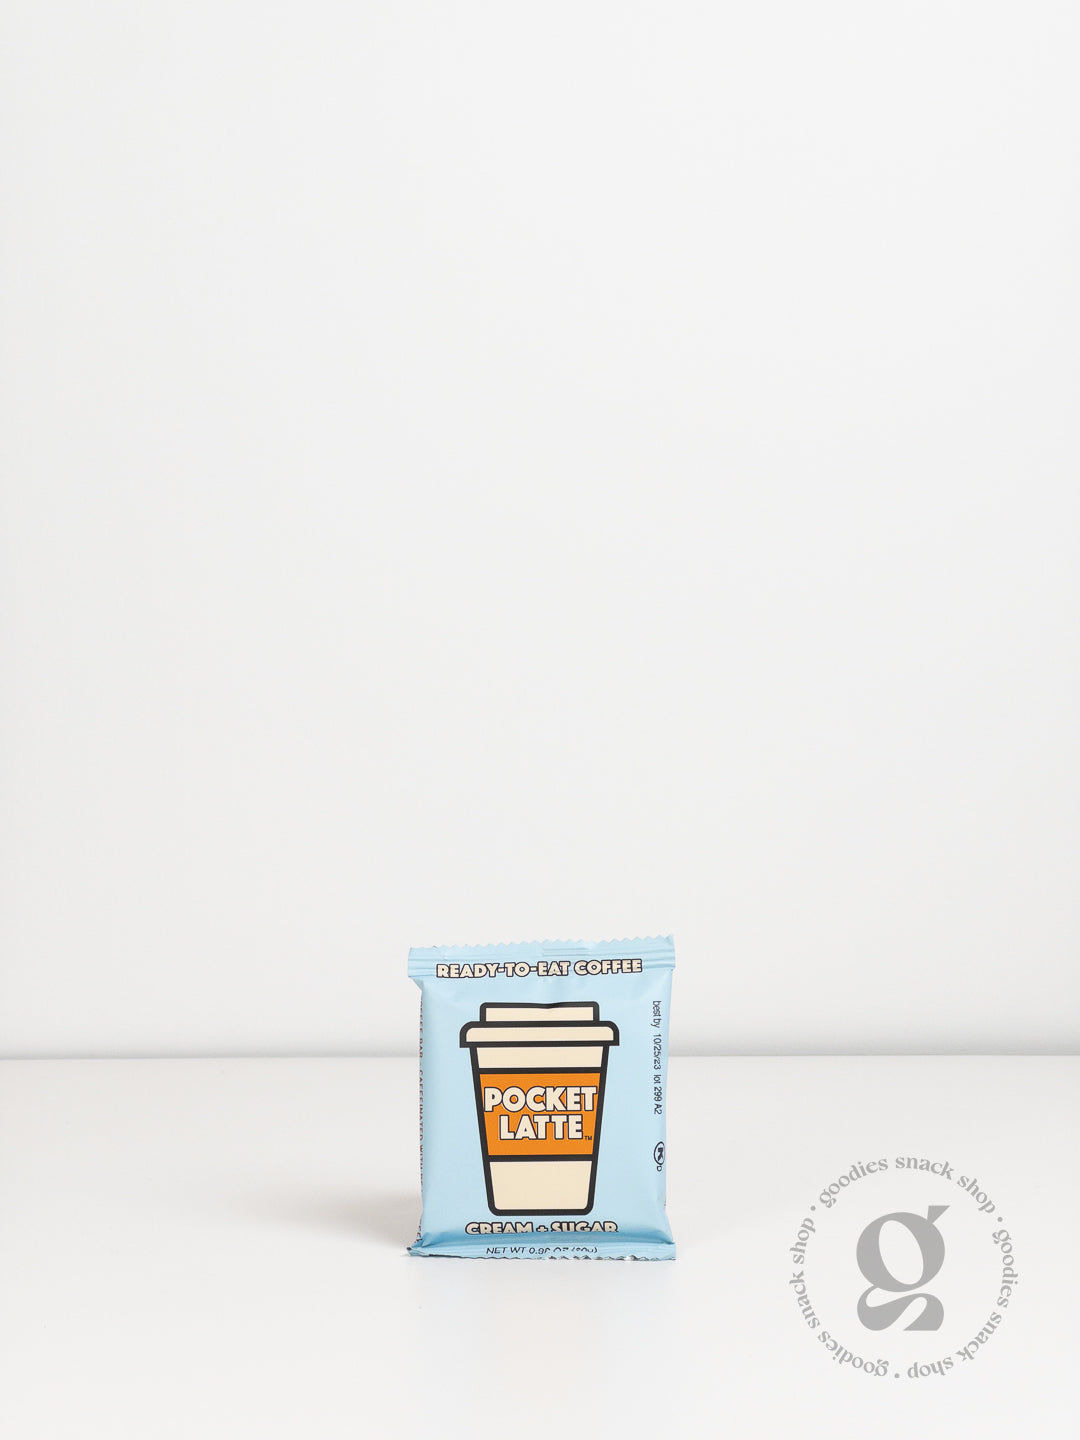 Pocket Latte - Cream & Sugar Coffee Bar